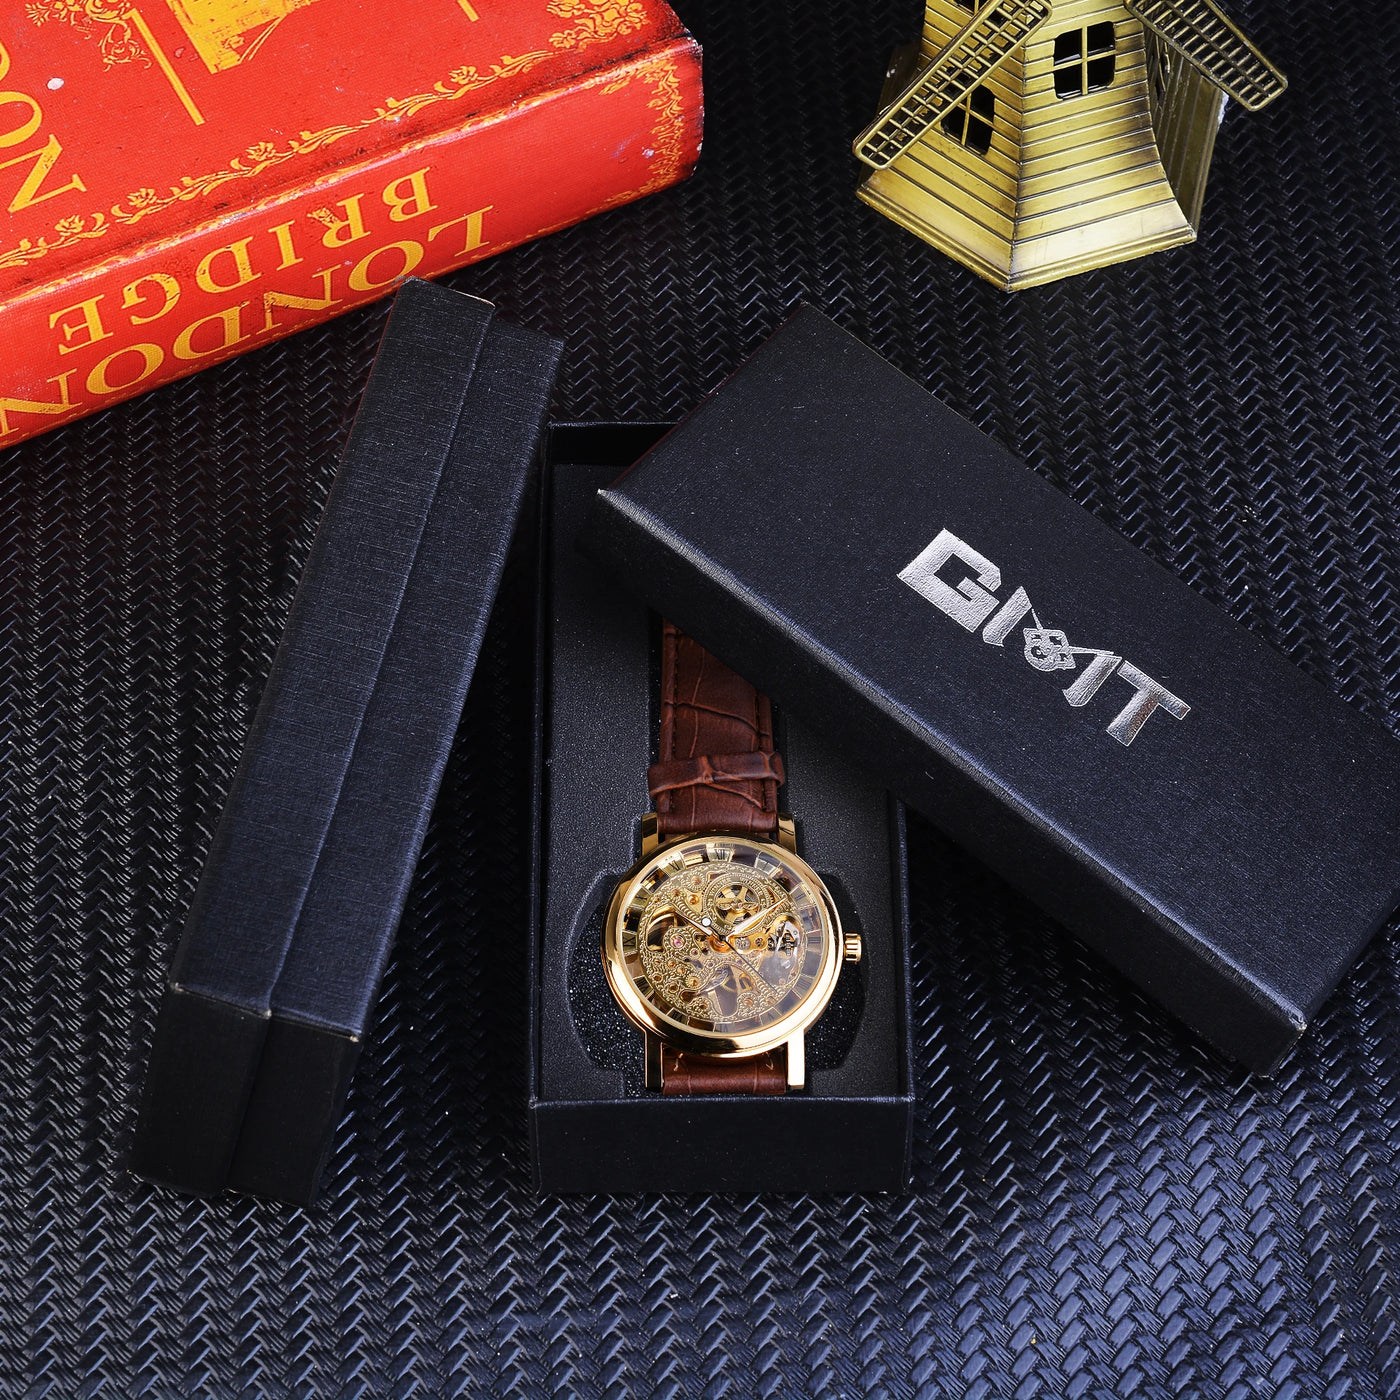 Winner Transparent Golden Case Luxury Casual Design Brown Leather Strap Mens Watches Top Brand Luxury Mechanical Skeleton Watch